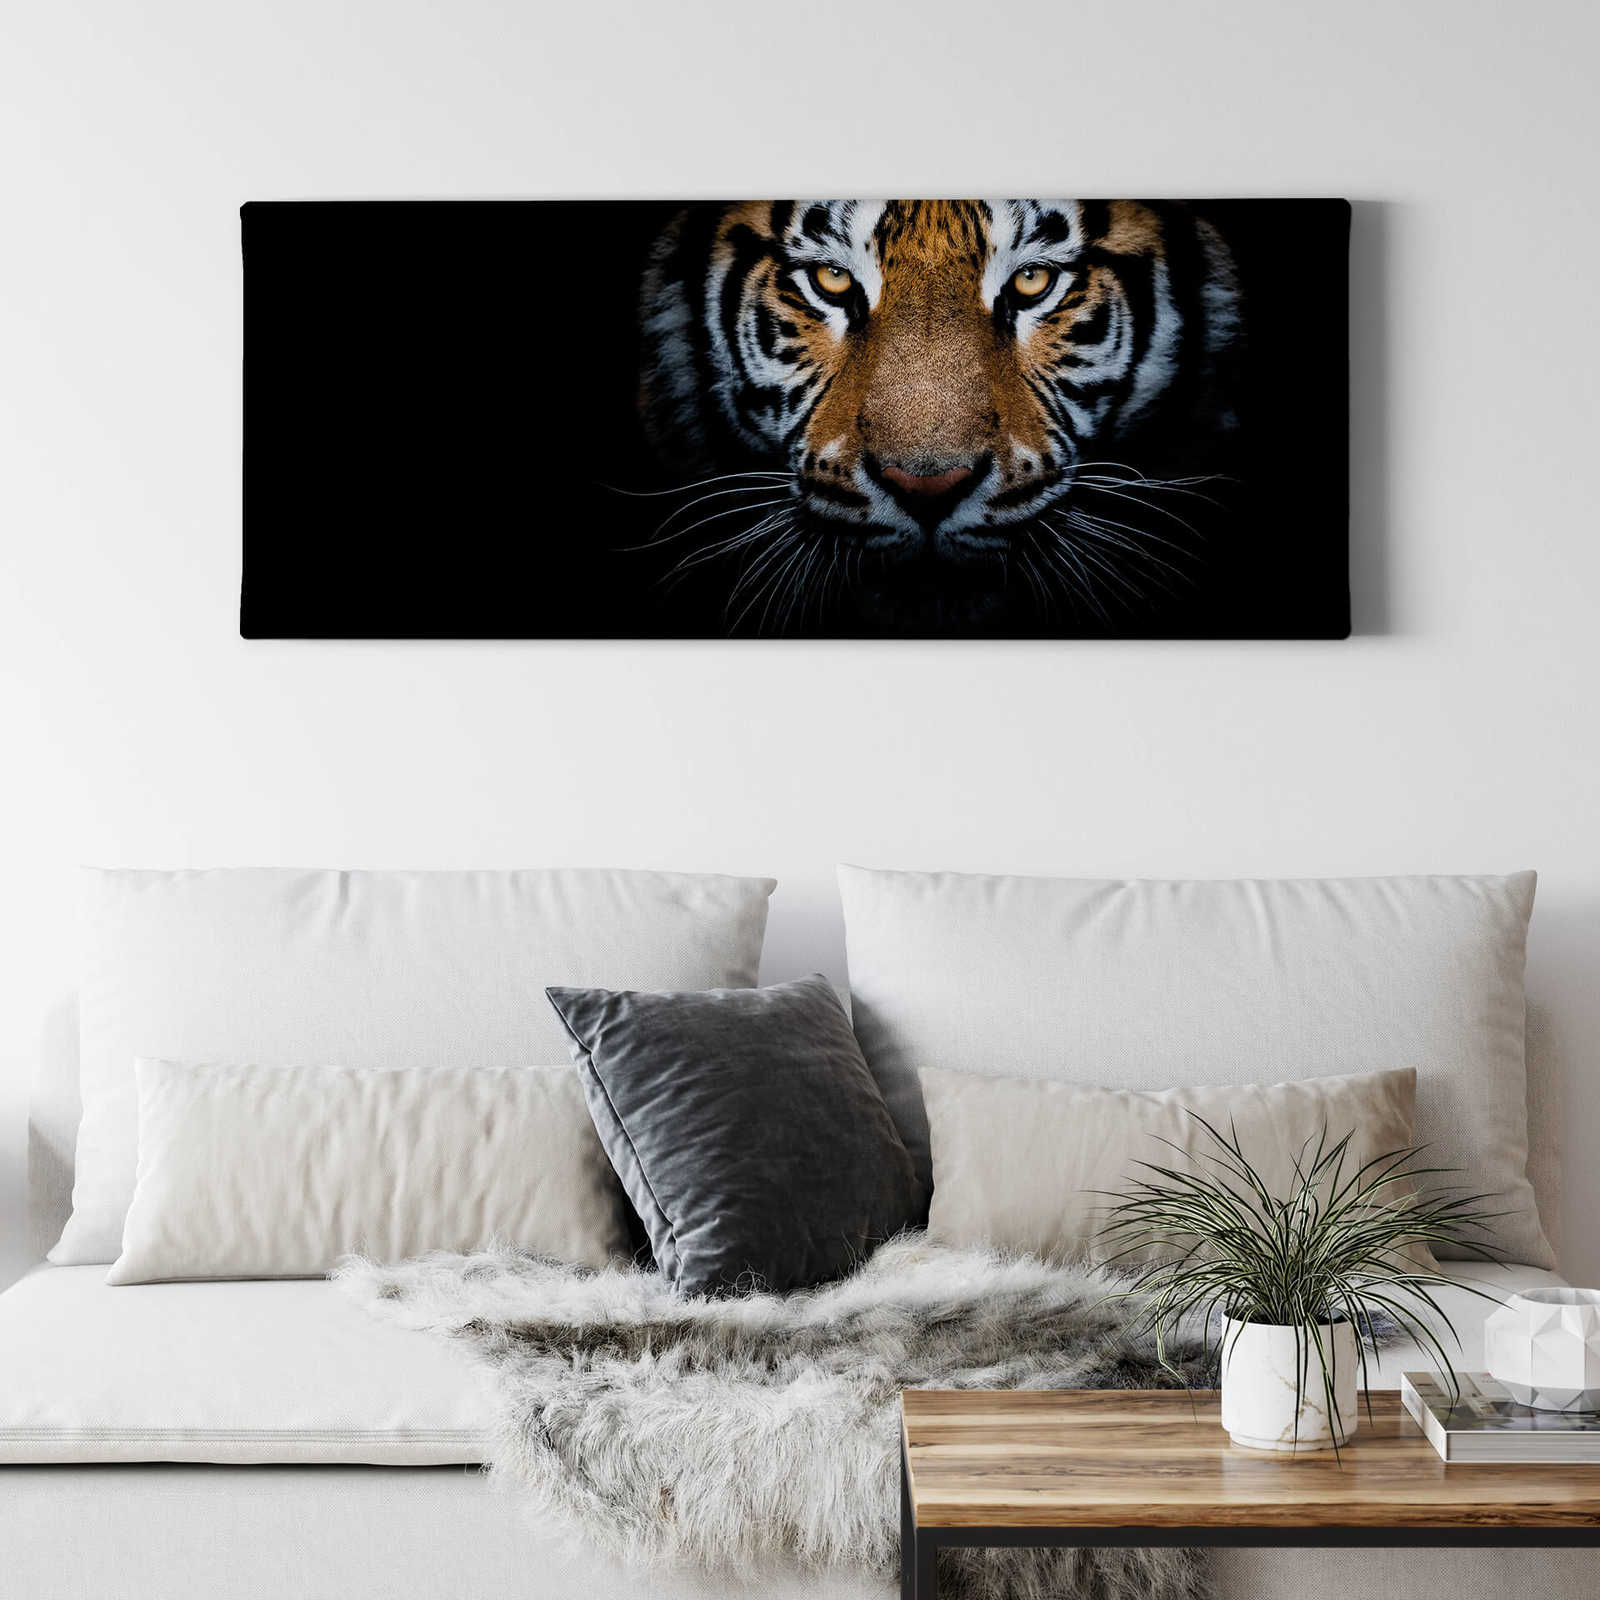             Panorama Leinwandbild mit Tiger in der Natur – 1,00 m x 0,40 m
        